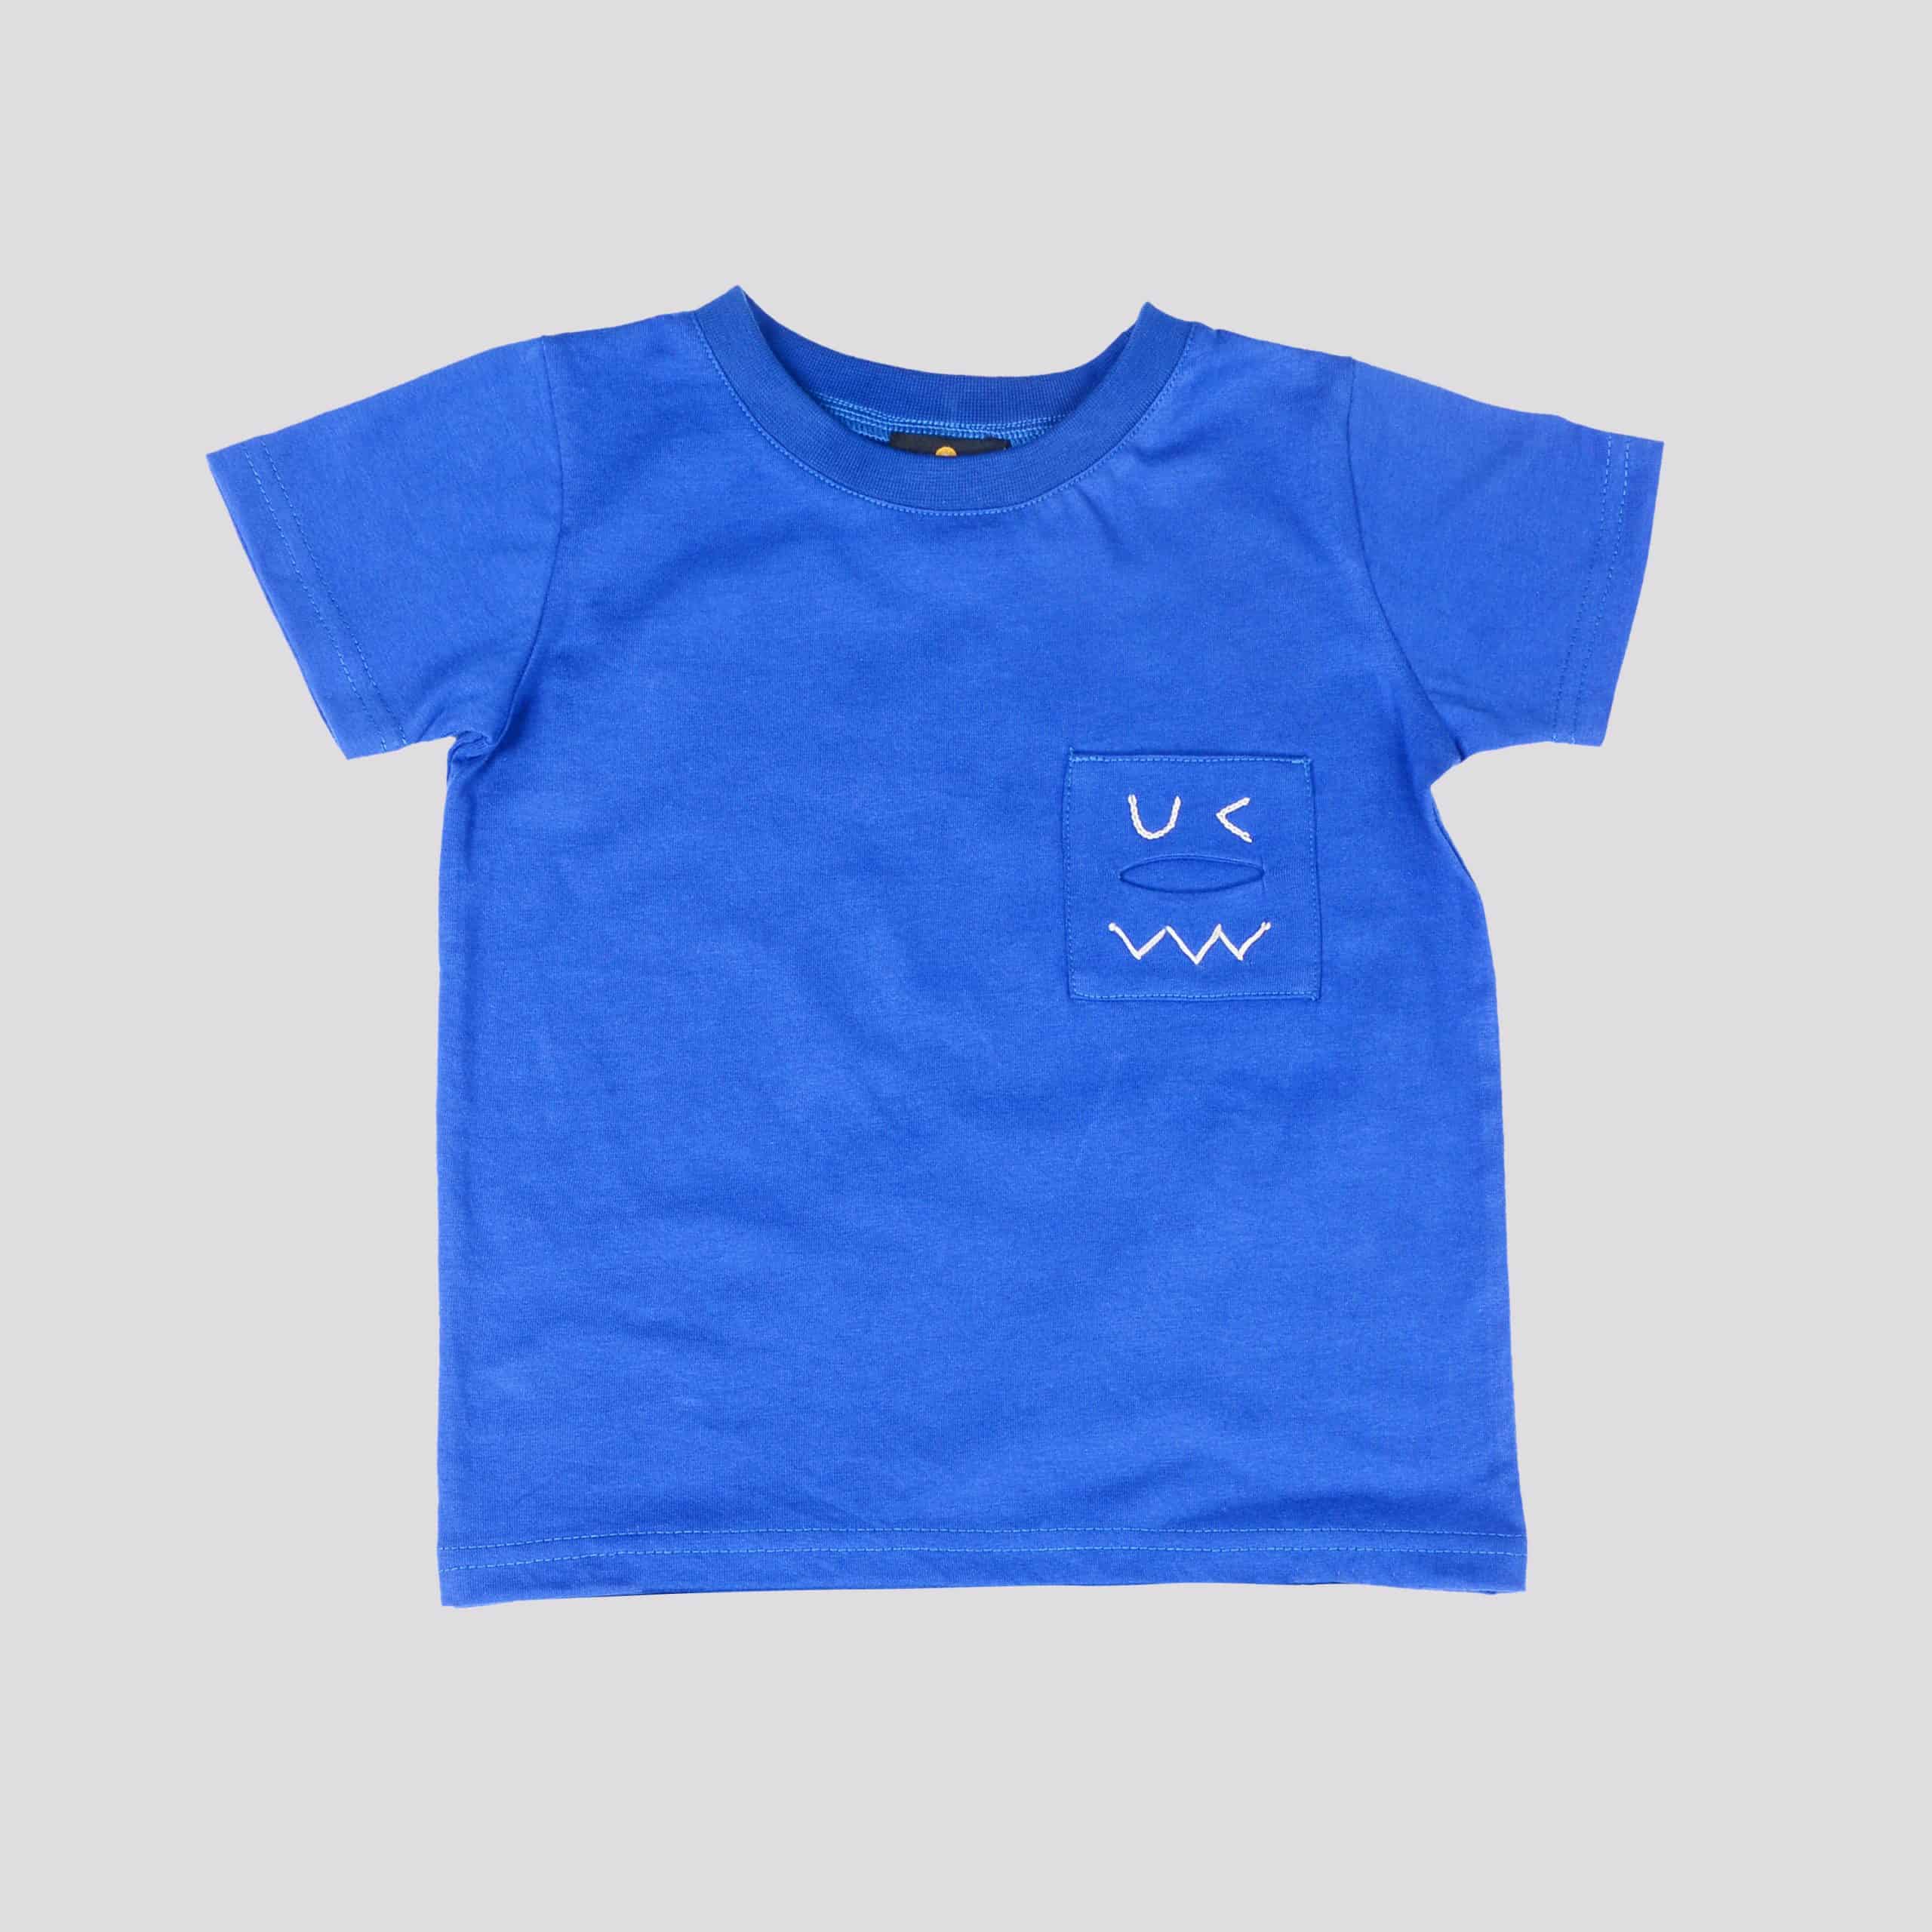 Solid Blue T-Shirt with Black Short-RKFCW67